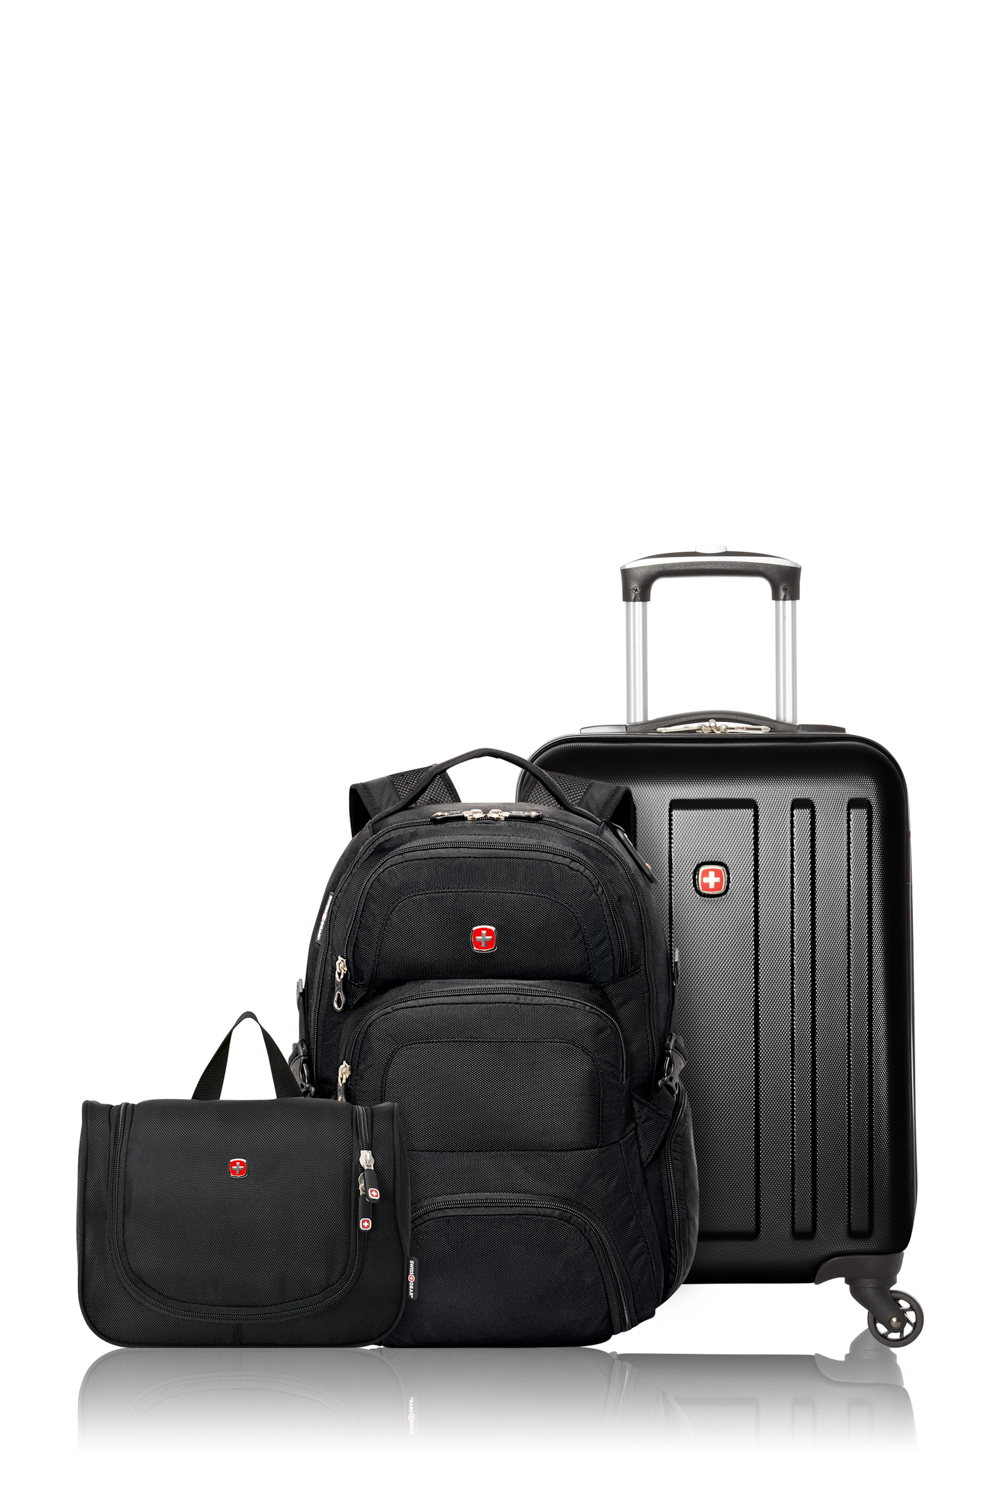 SWISSGEAR CANADA | Luggage, Luggage Sets, Travel Luggage, Carry On 